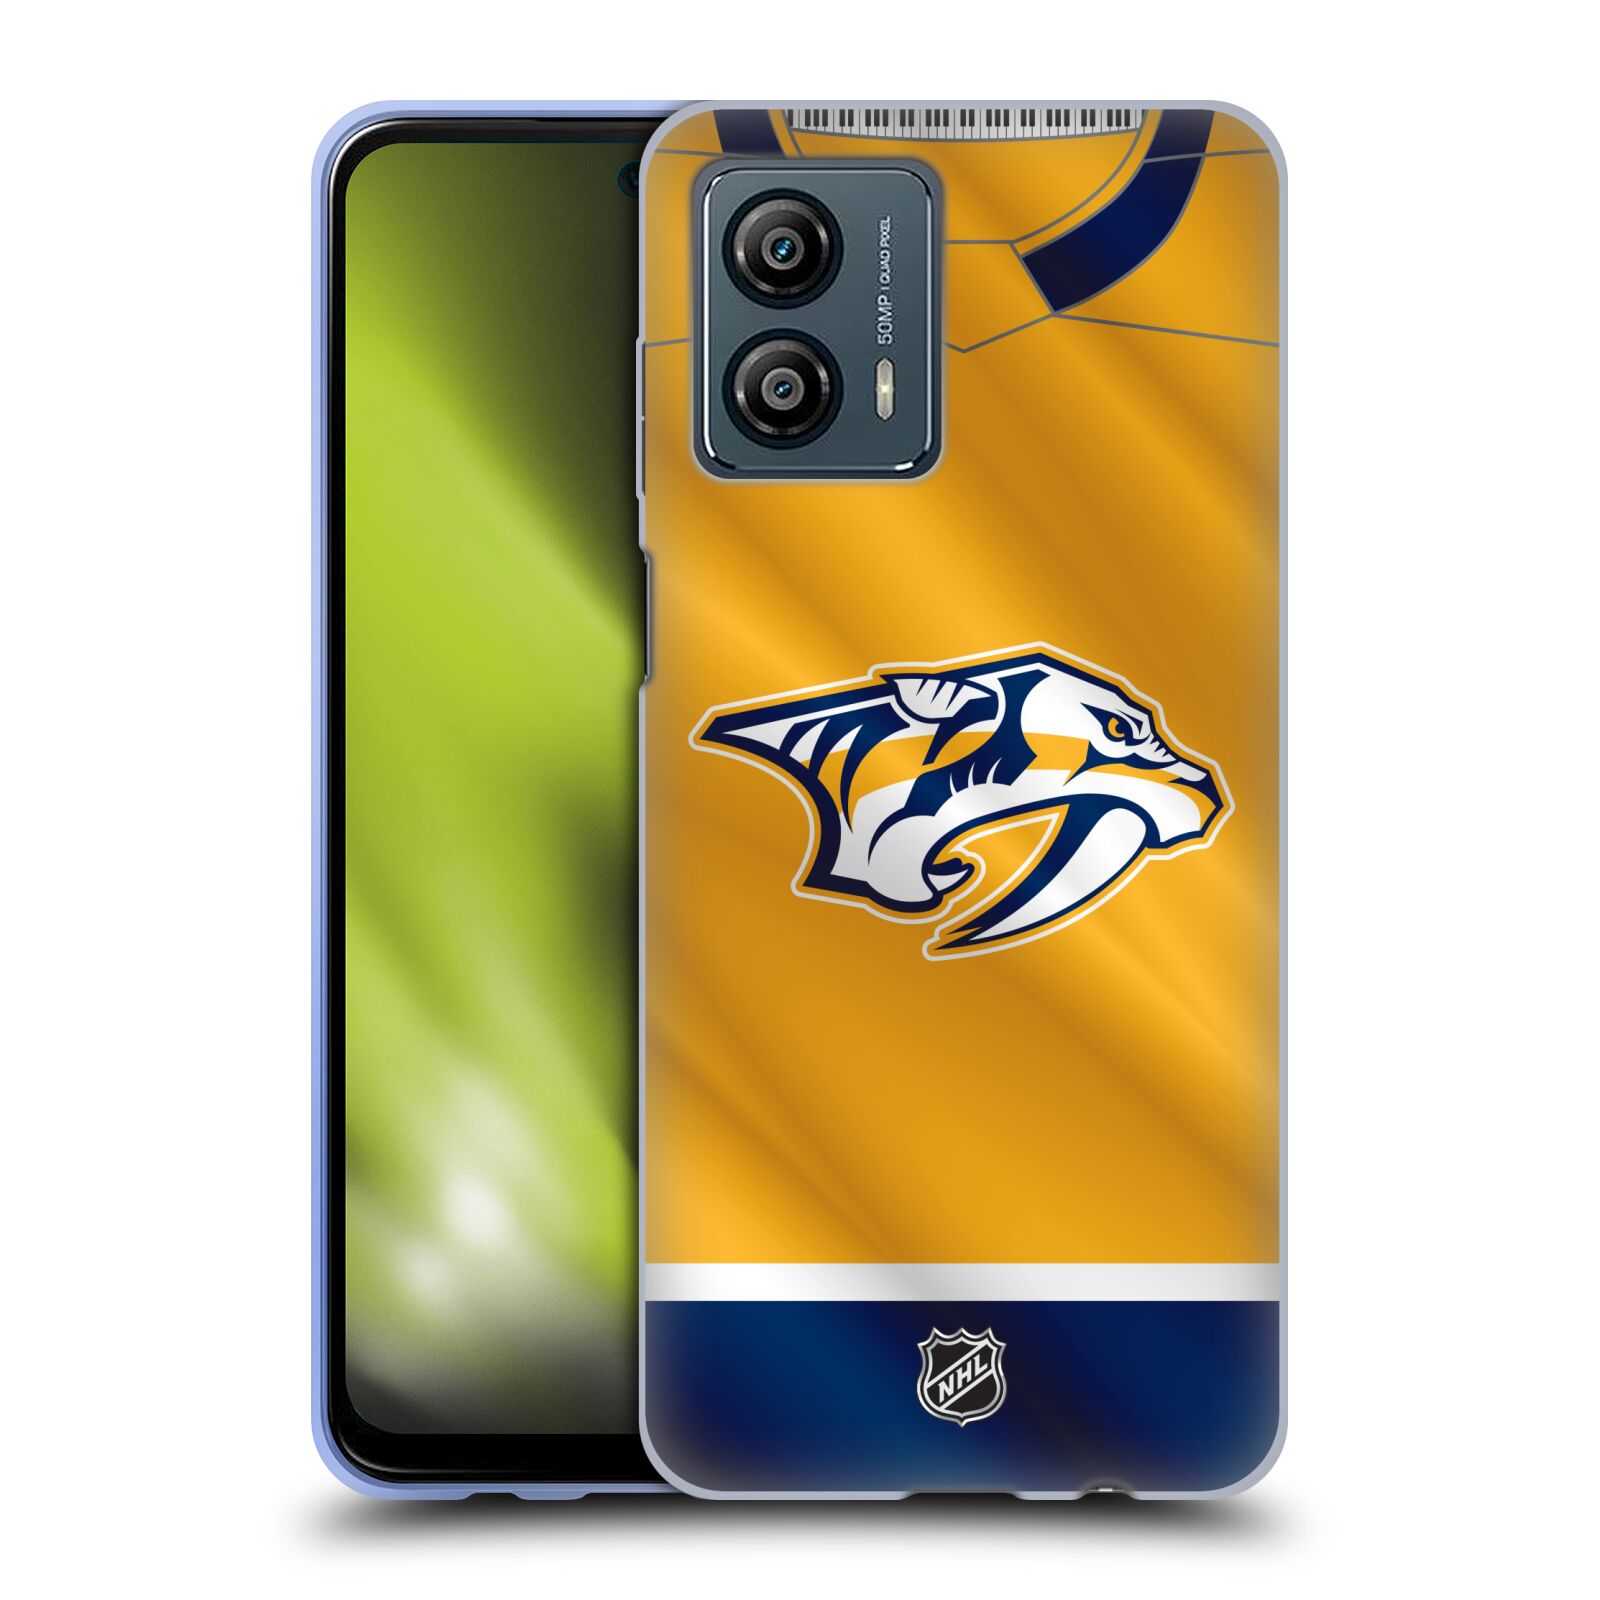 Silikonové pouzdro na mobil Motorola Moto G53 5G - NHL - Dres Nashville Predators (Silikonový kryt, obal, pouzdro na mobilní telefon Motorola Moto G53 5G s licencovaným motivem NHL - Dres Nashville Predators)